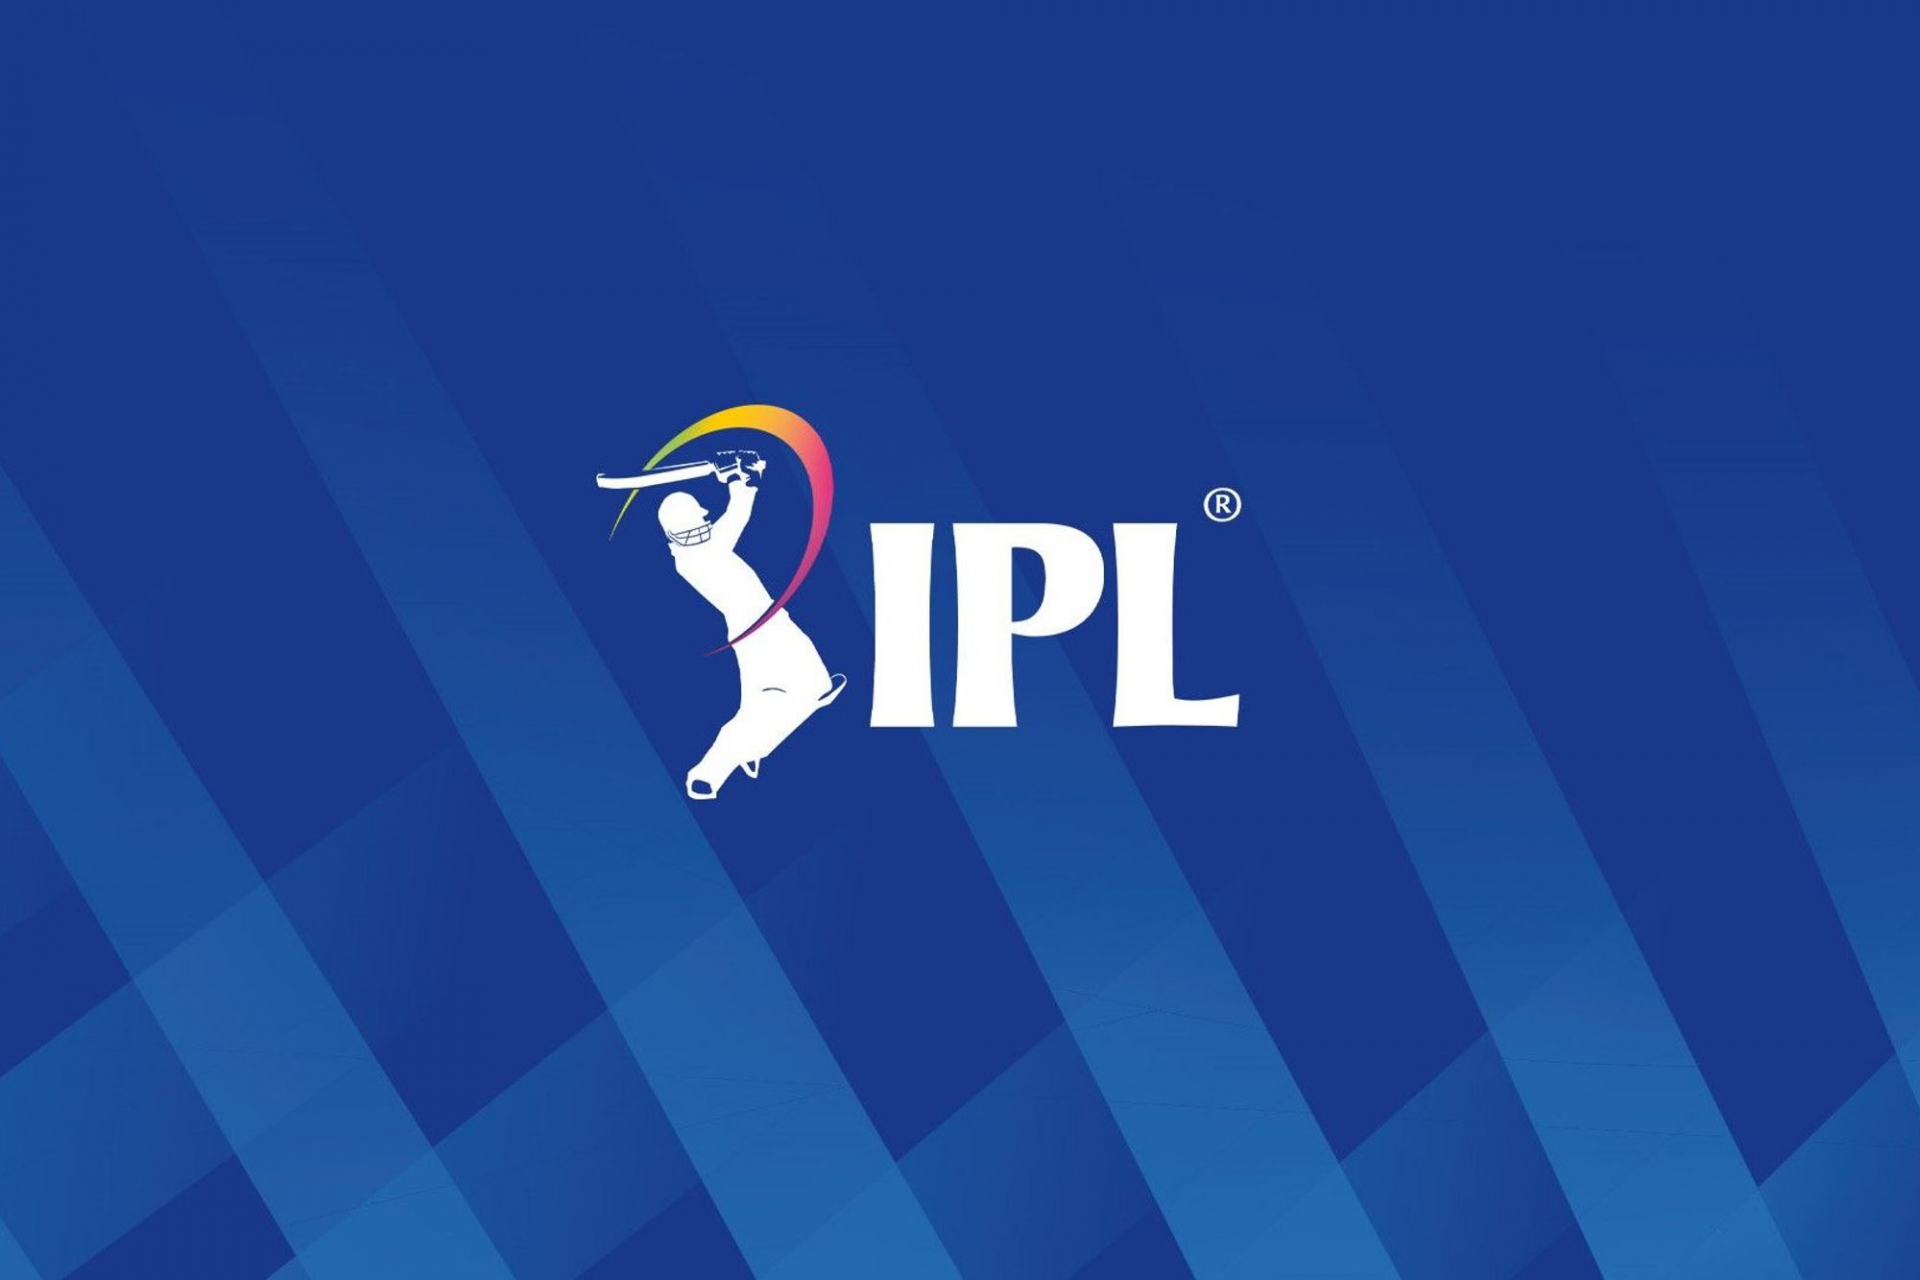 How To Watch IPL: TV Channels, Live Stream Online, Match Schedule